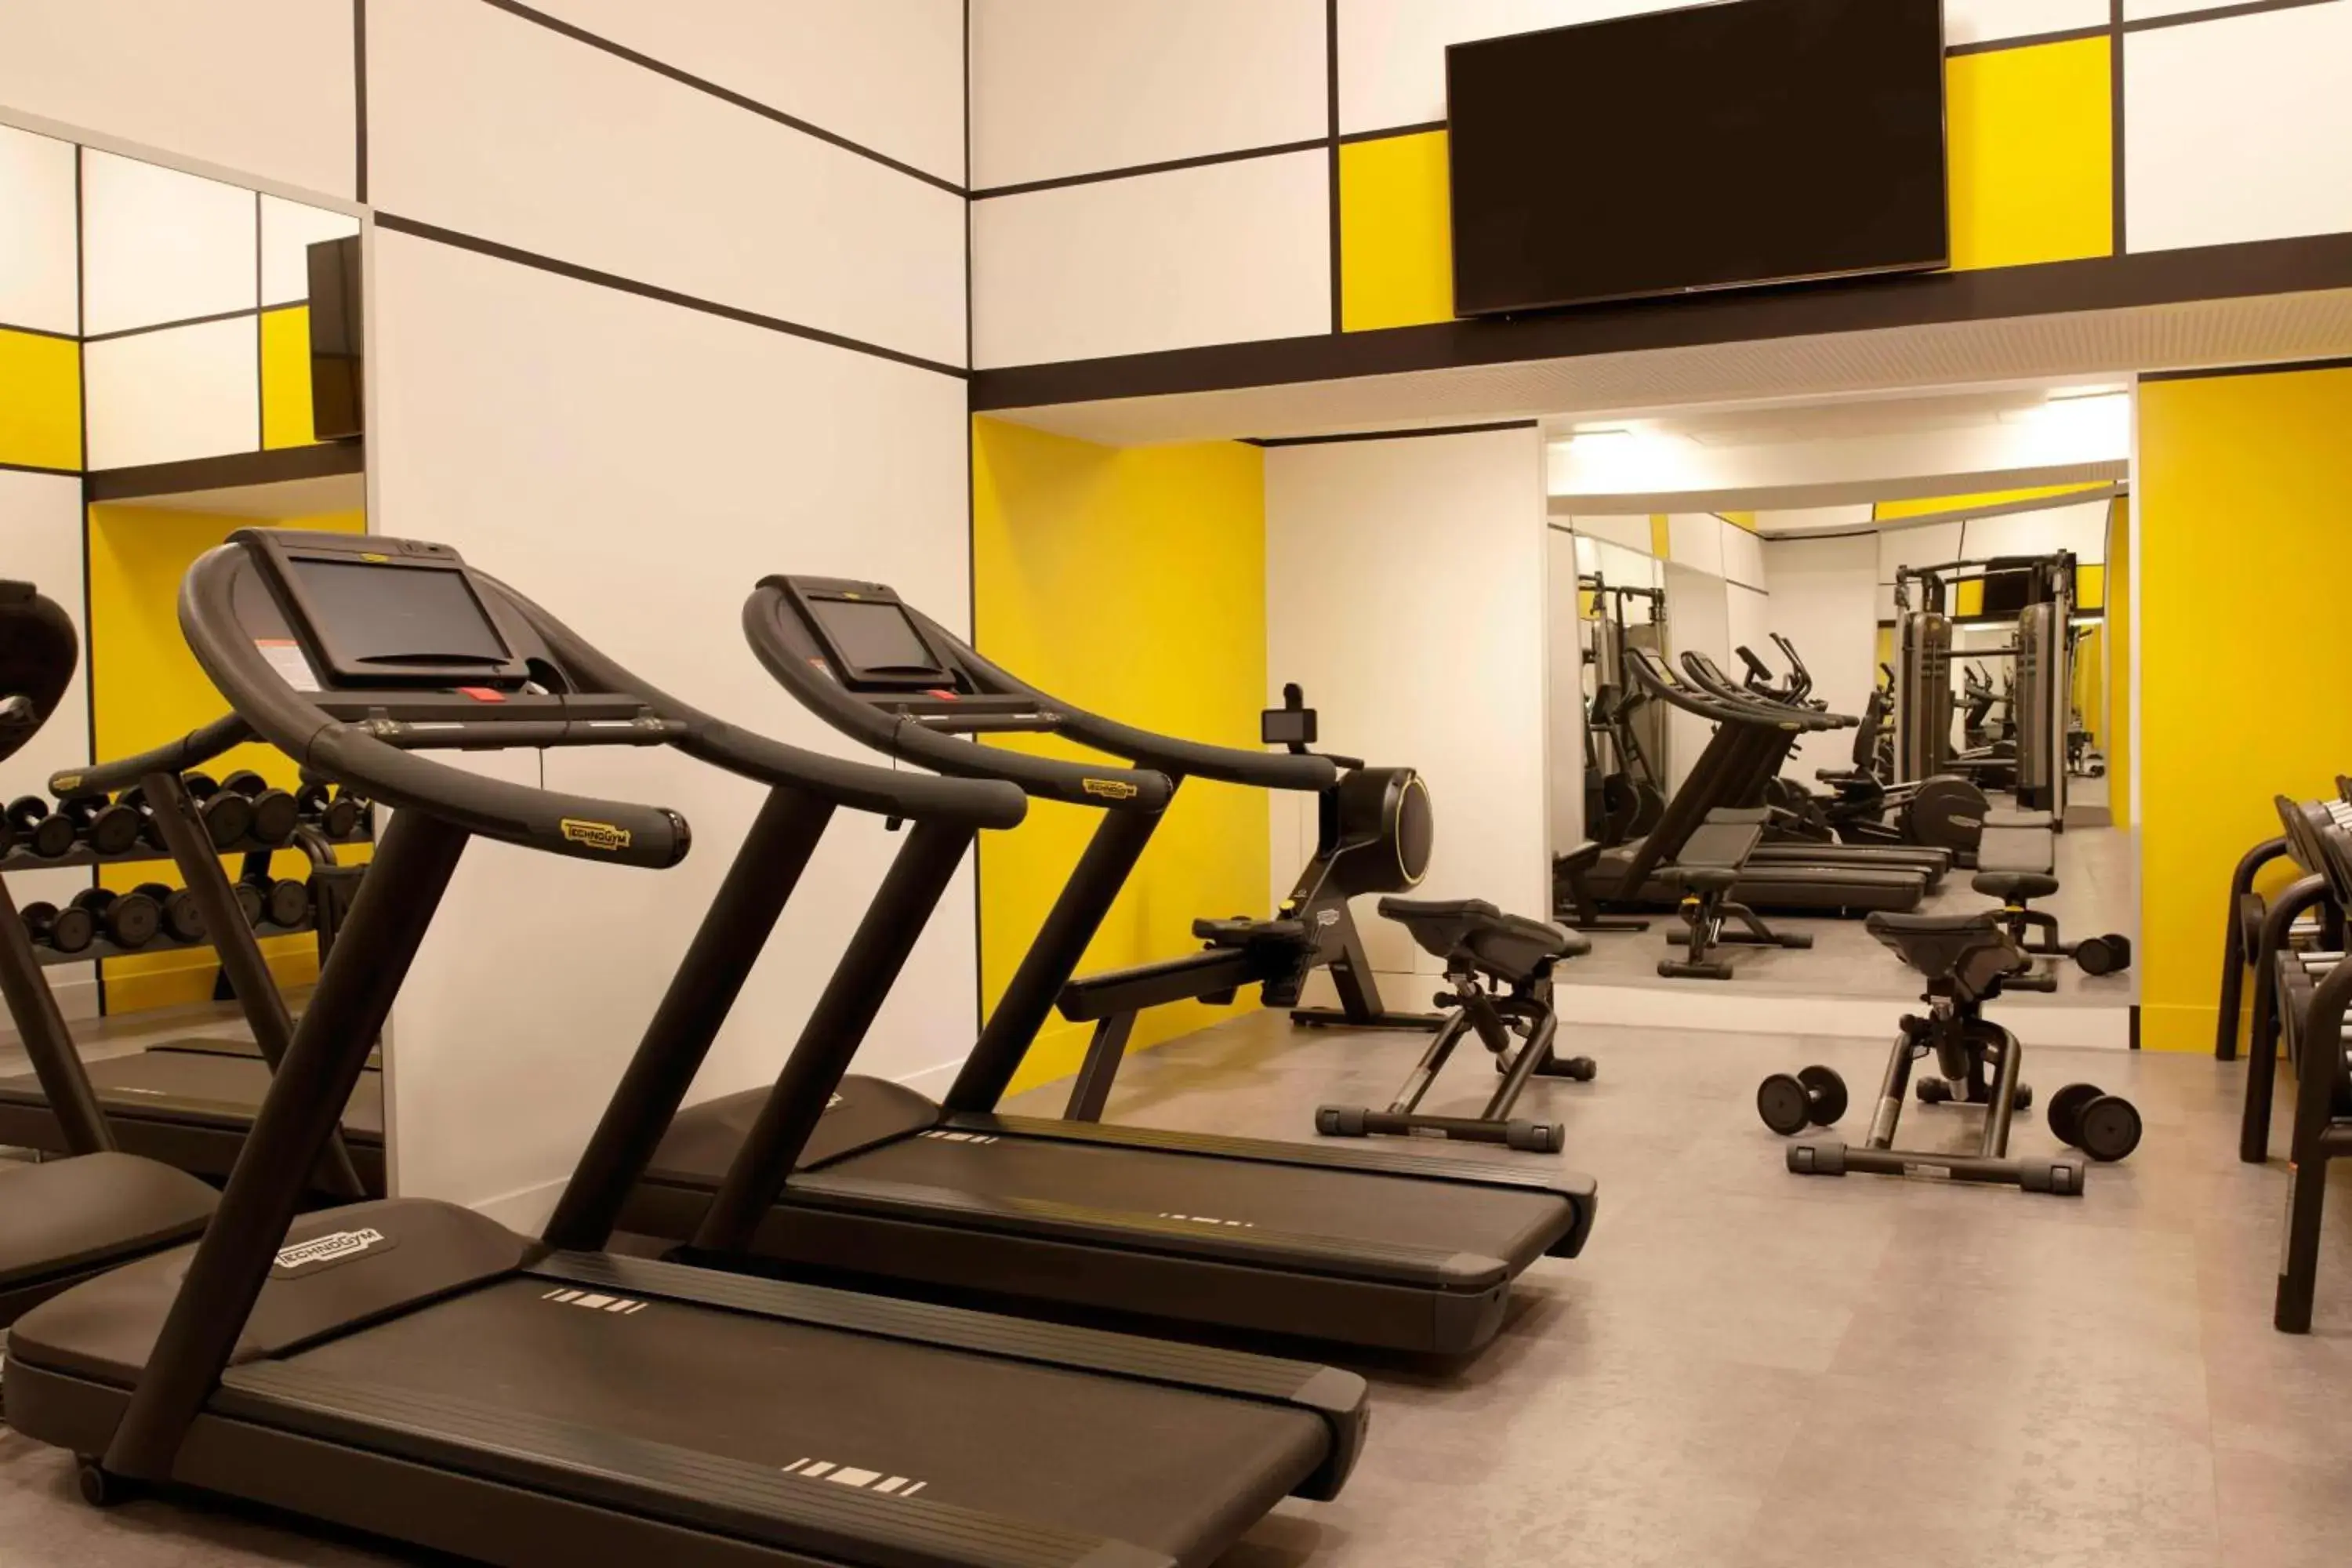 Fitness centre/facilities, Fitness Center/Facilities in Courtyard by Marriott Paris Gare de Lyon